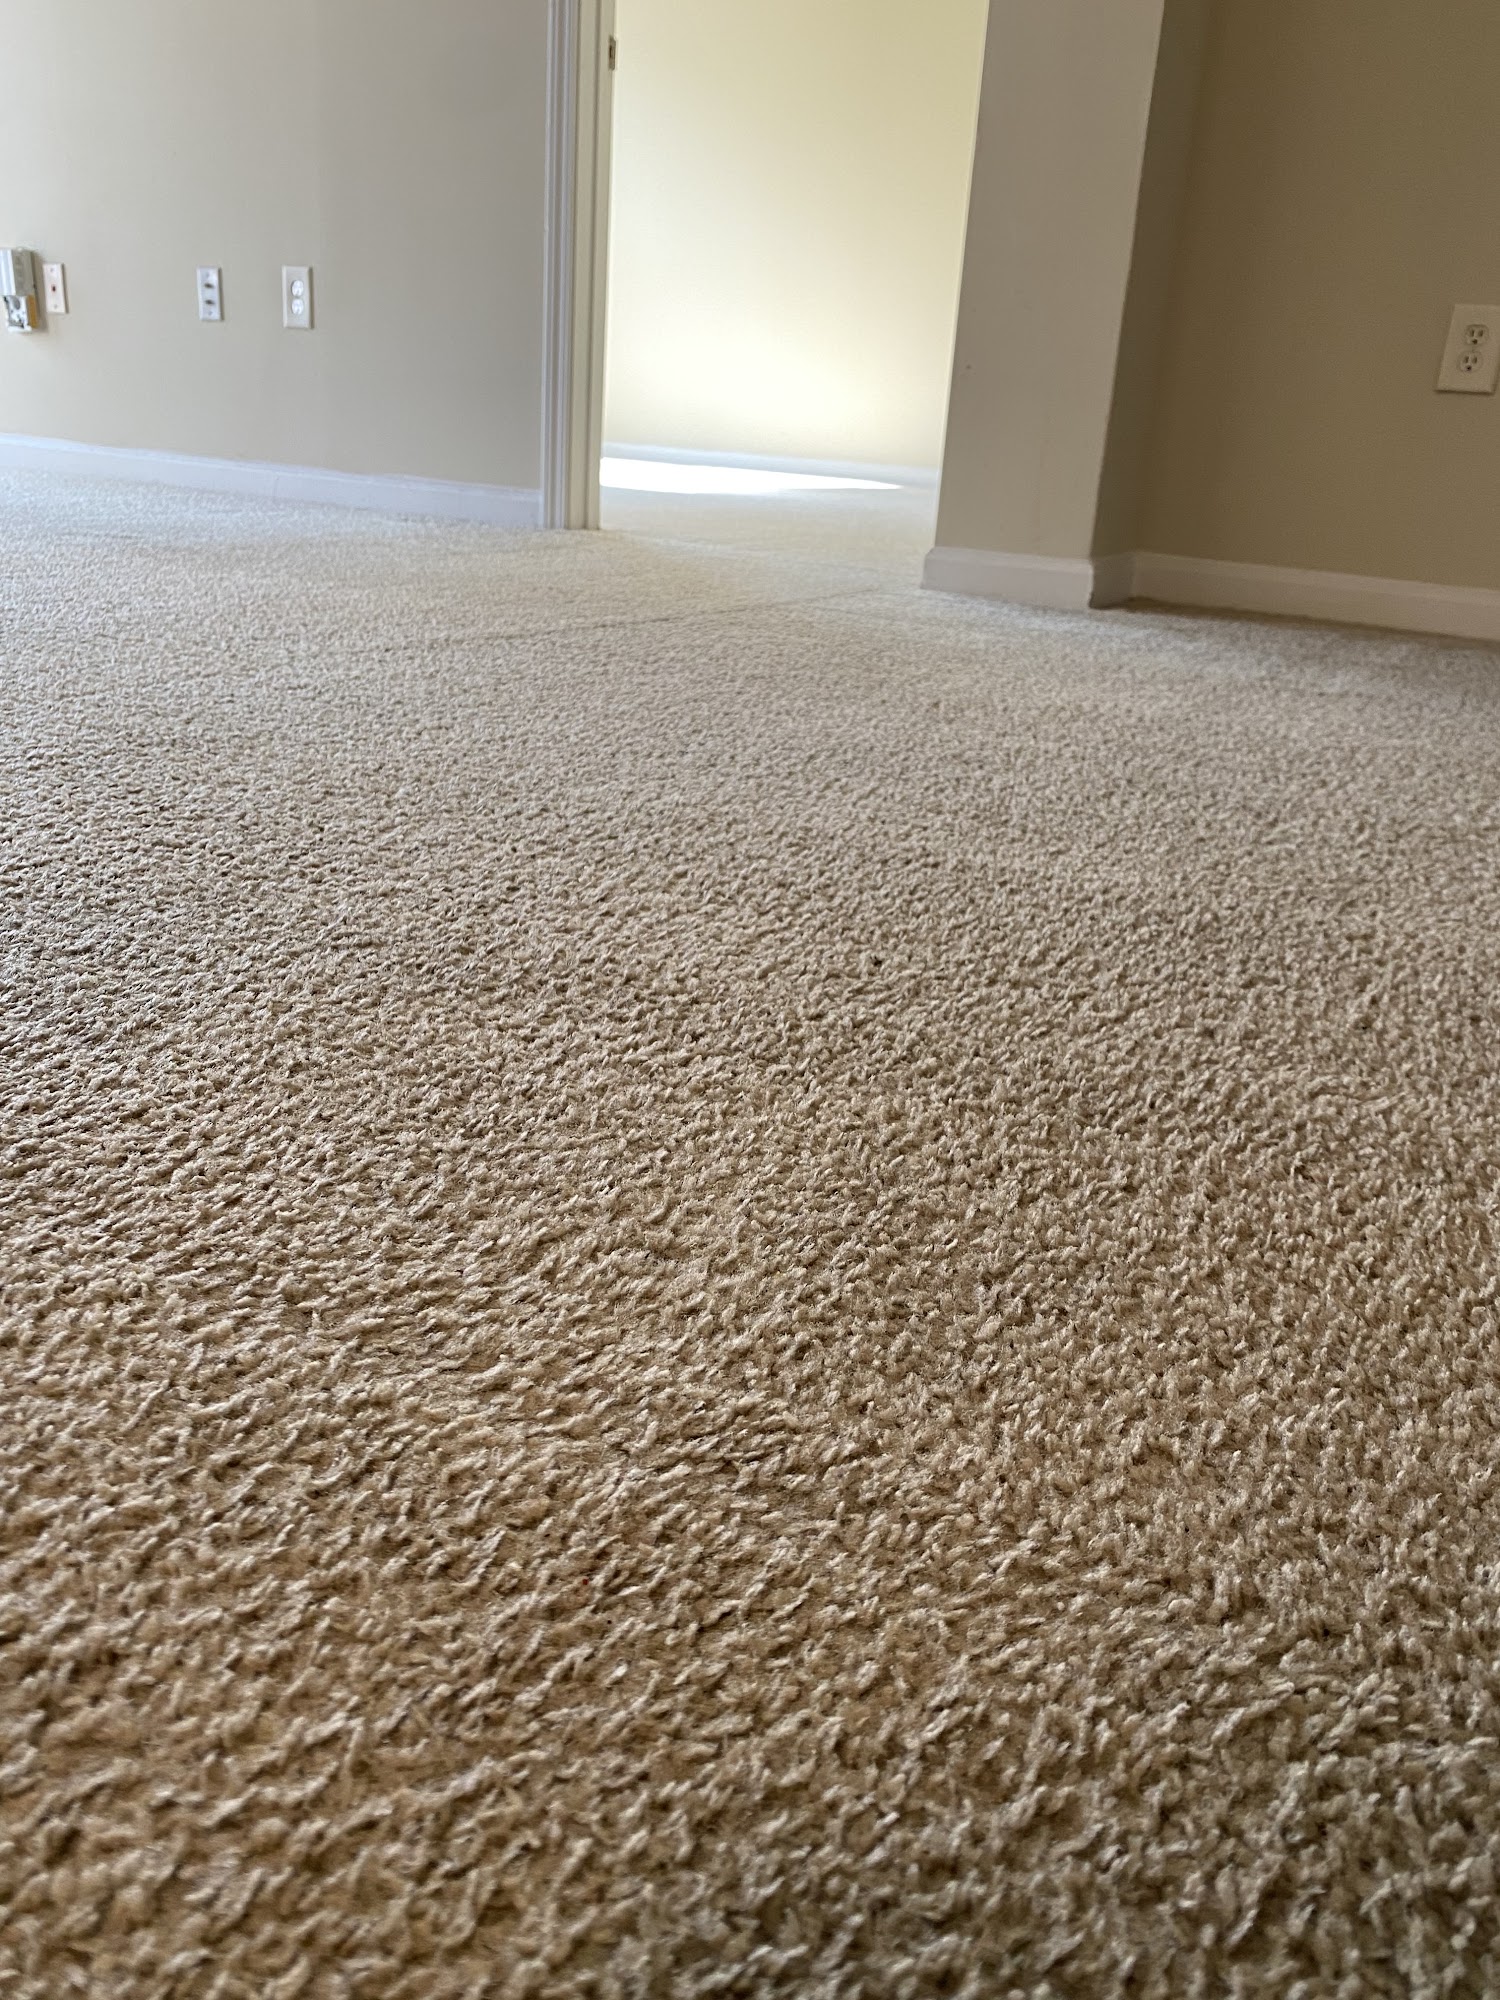 Best Carpet Cleaning Services, LLC